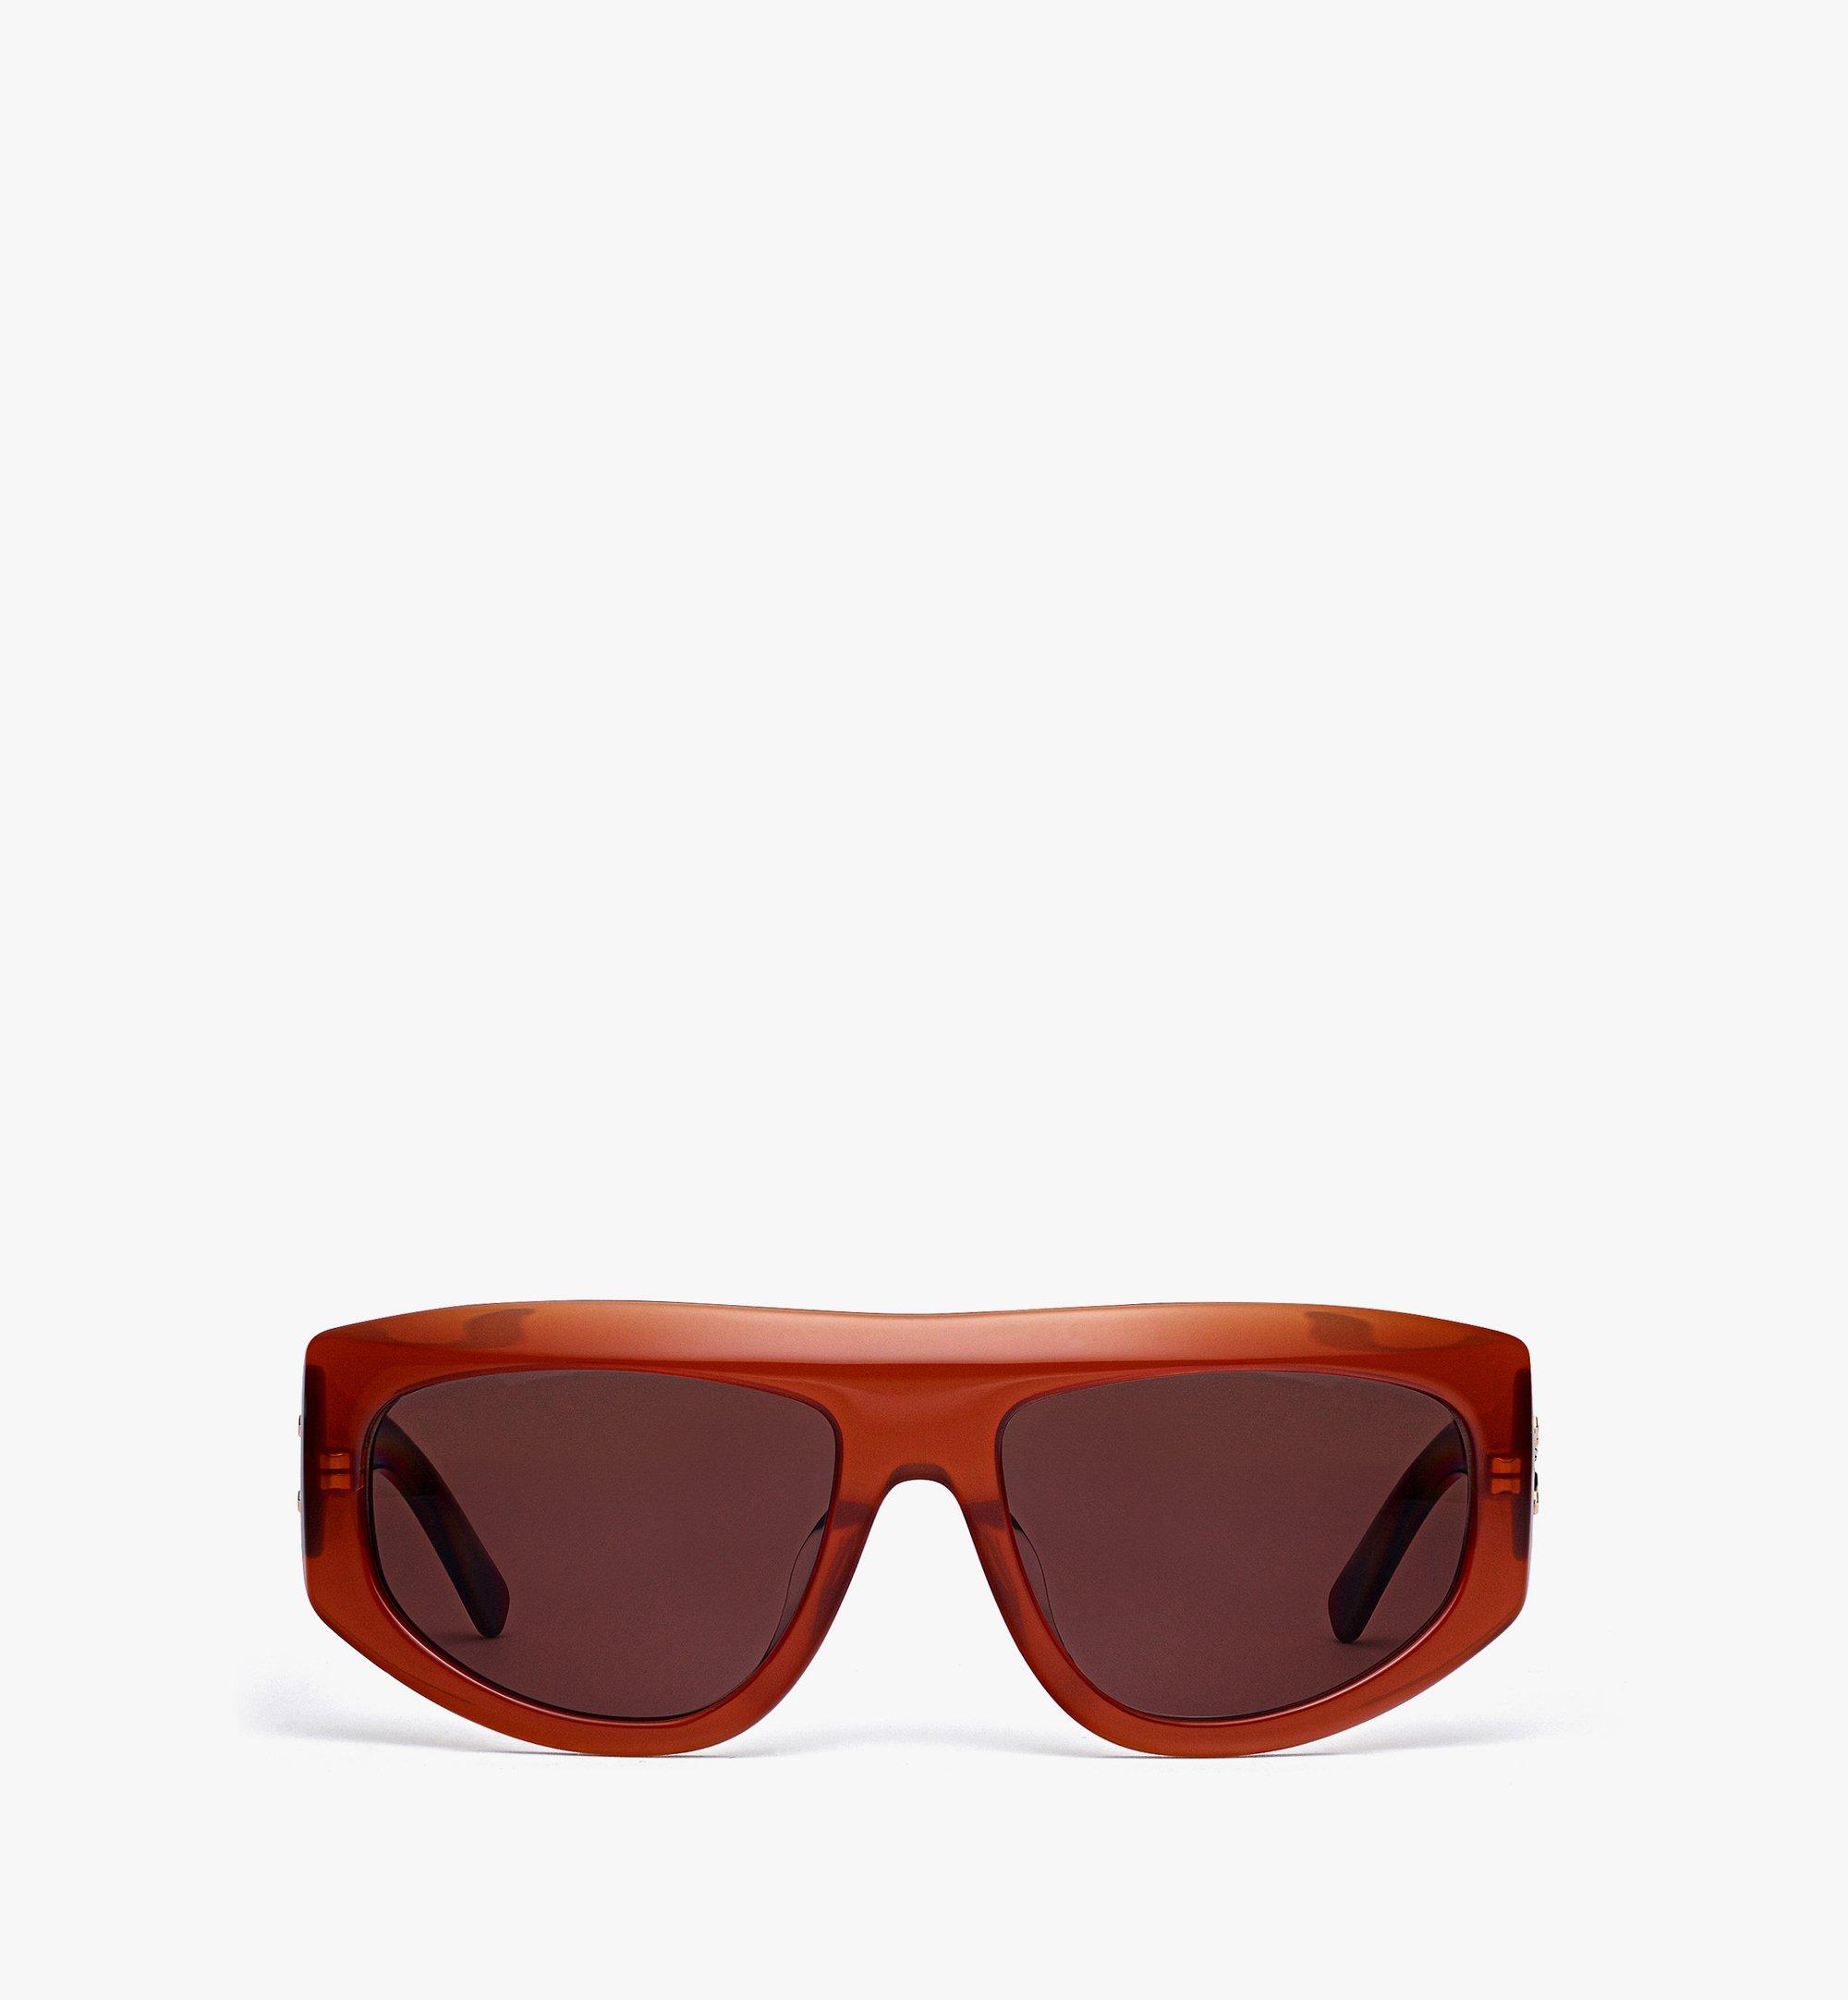 Universal Fit Unisex Square Sunglasses Brown | MCM ®US